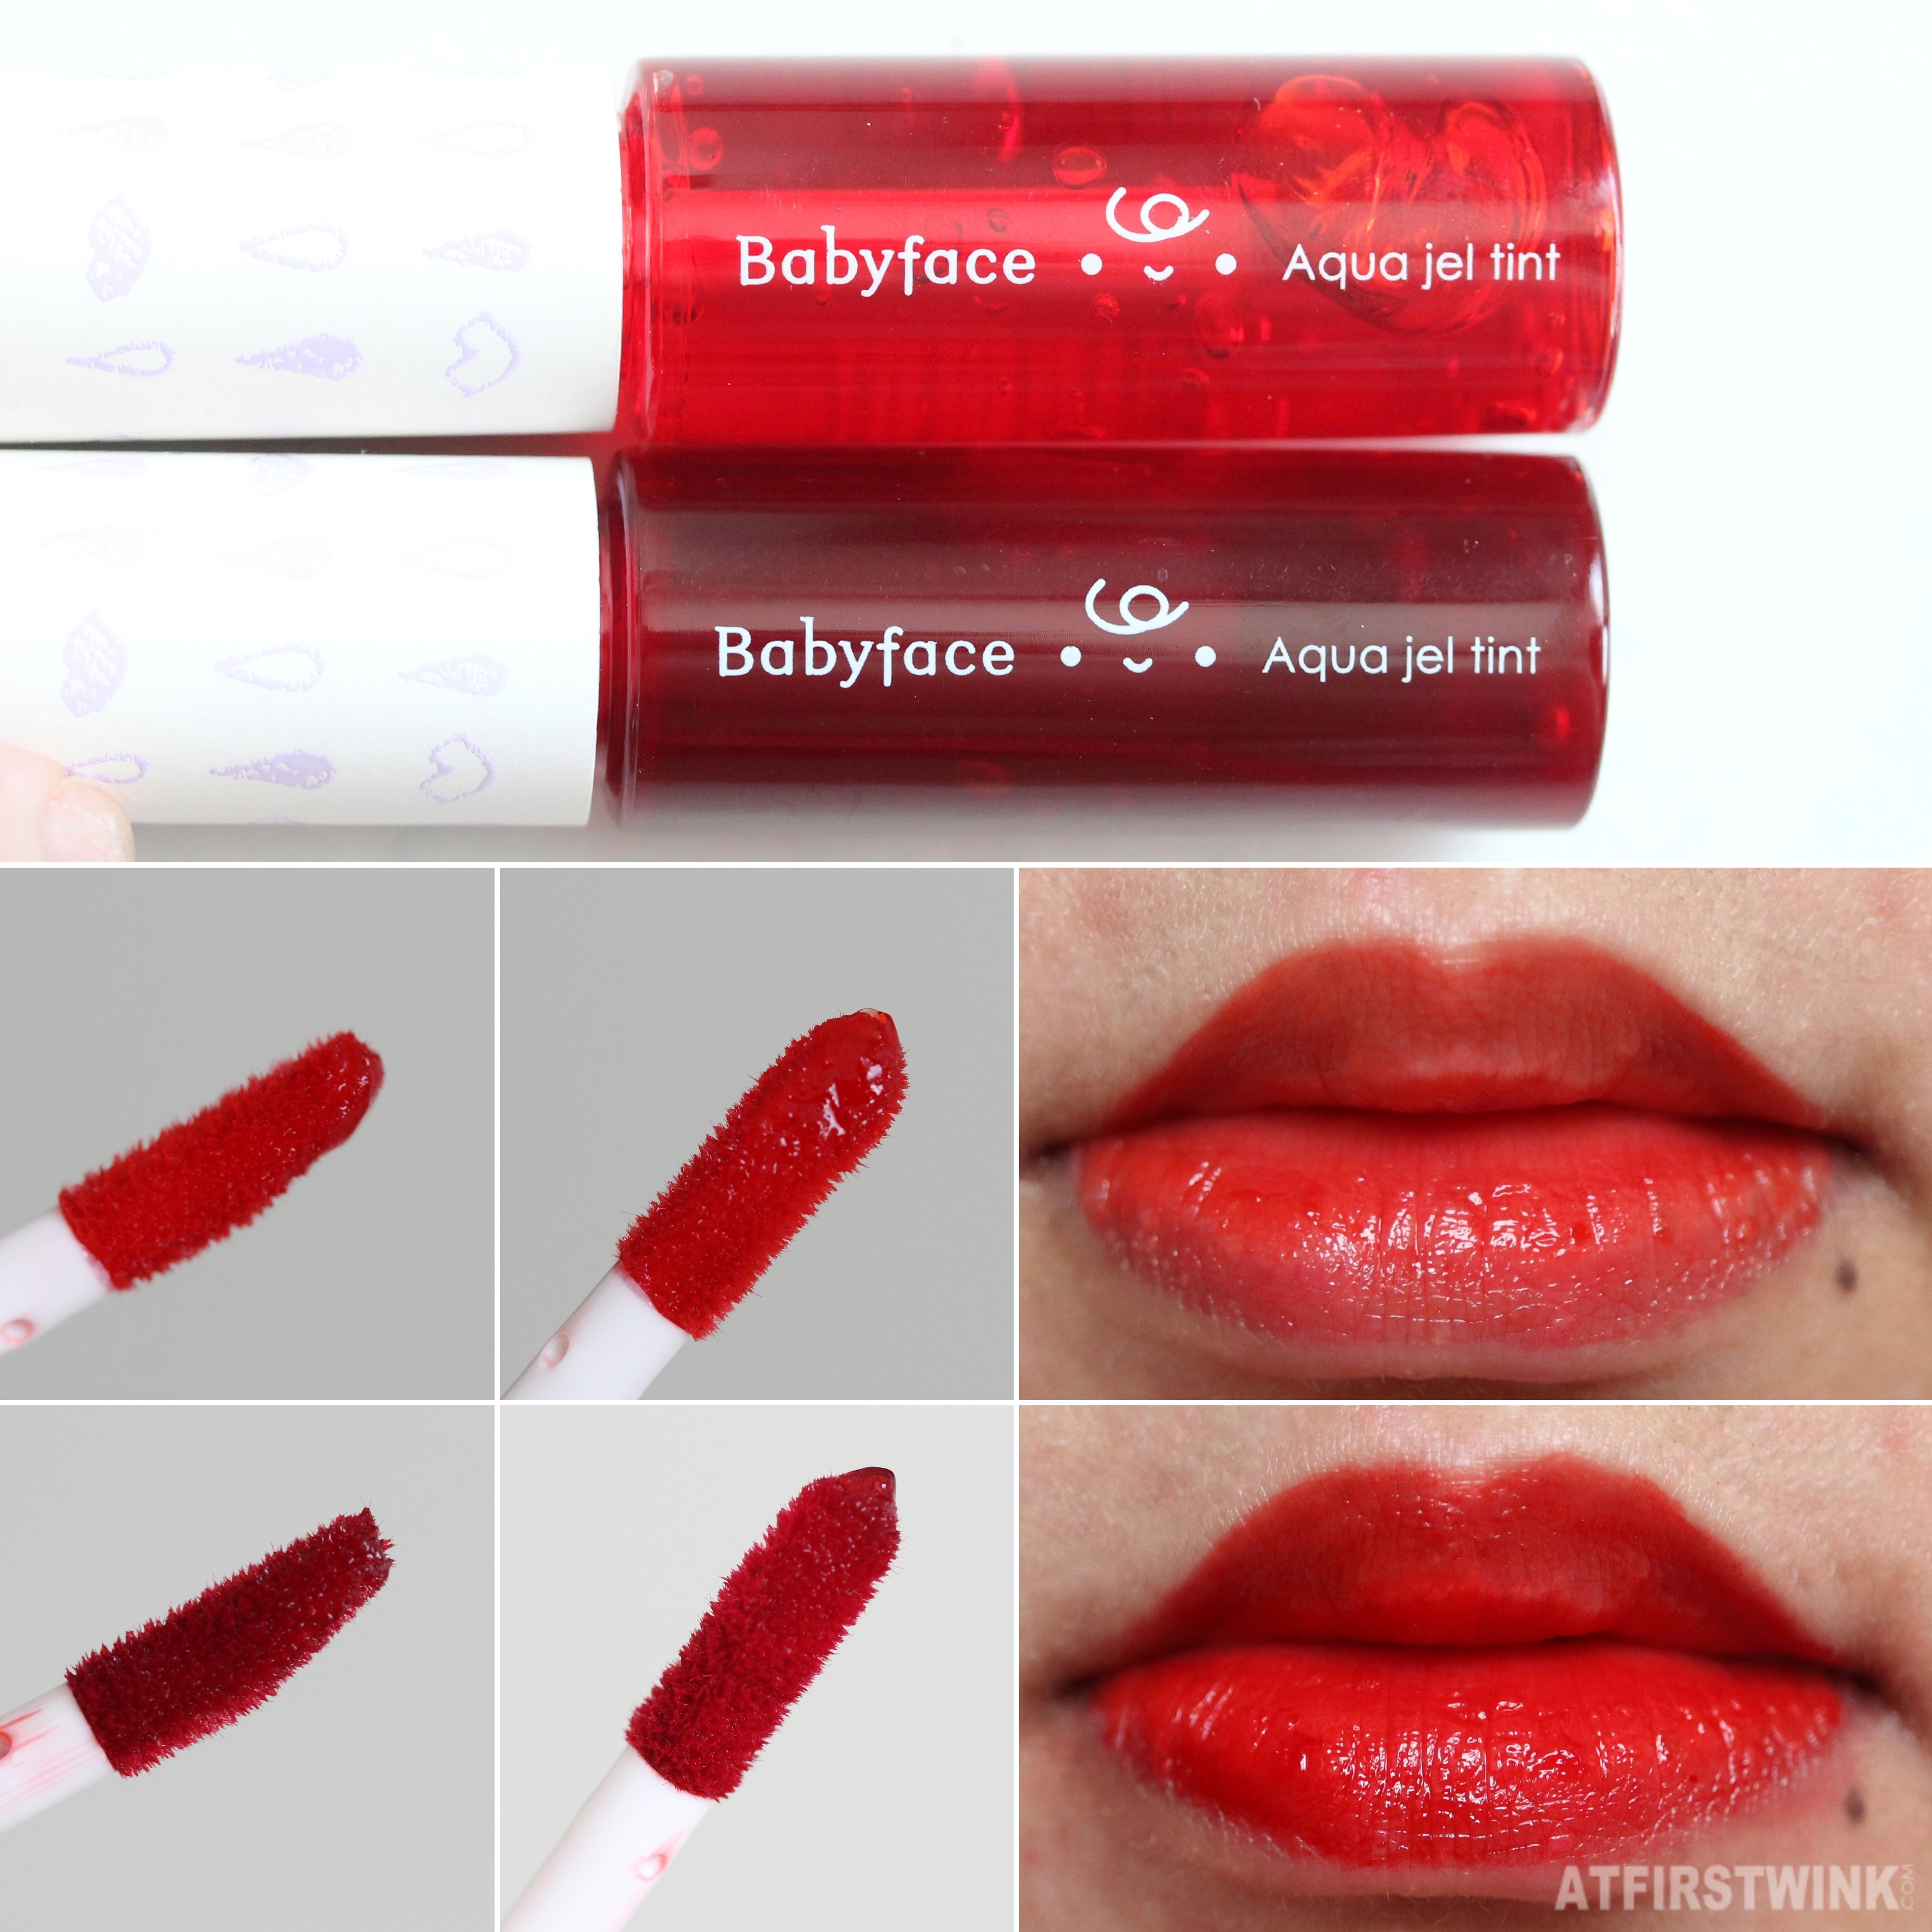 It's skin babyface aqua gel tint 01 - cherry and 02 - strawberry applicator lip swatches